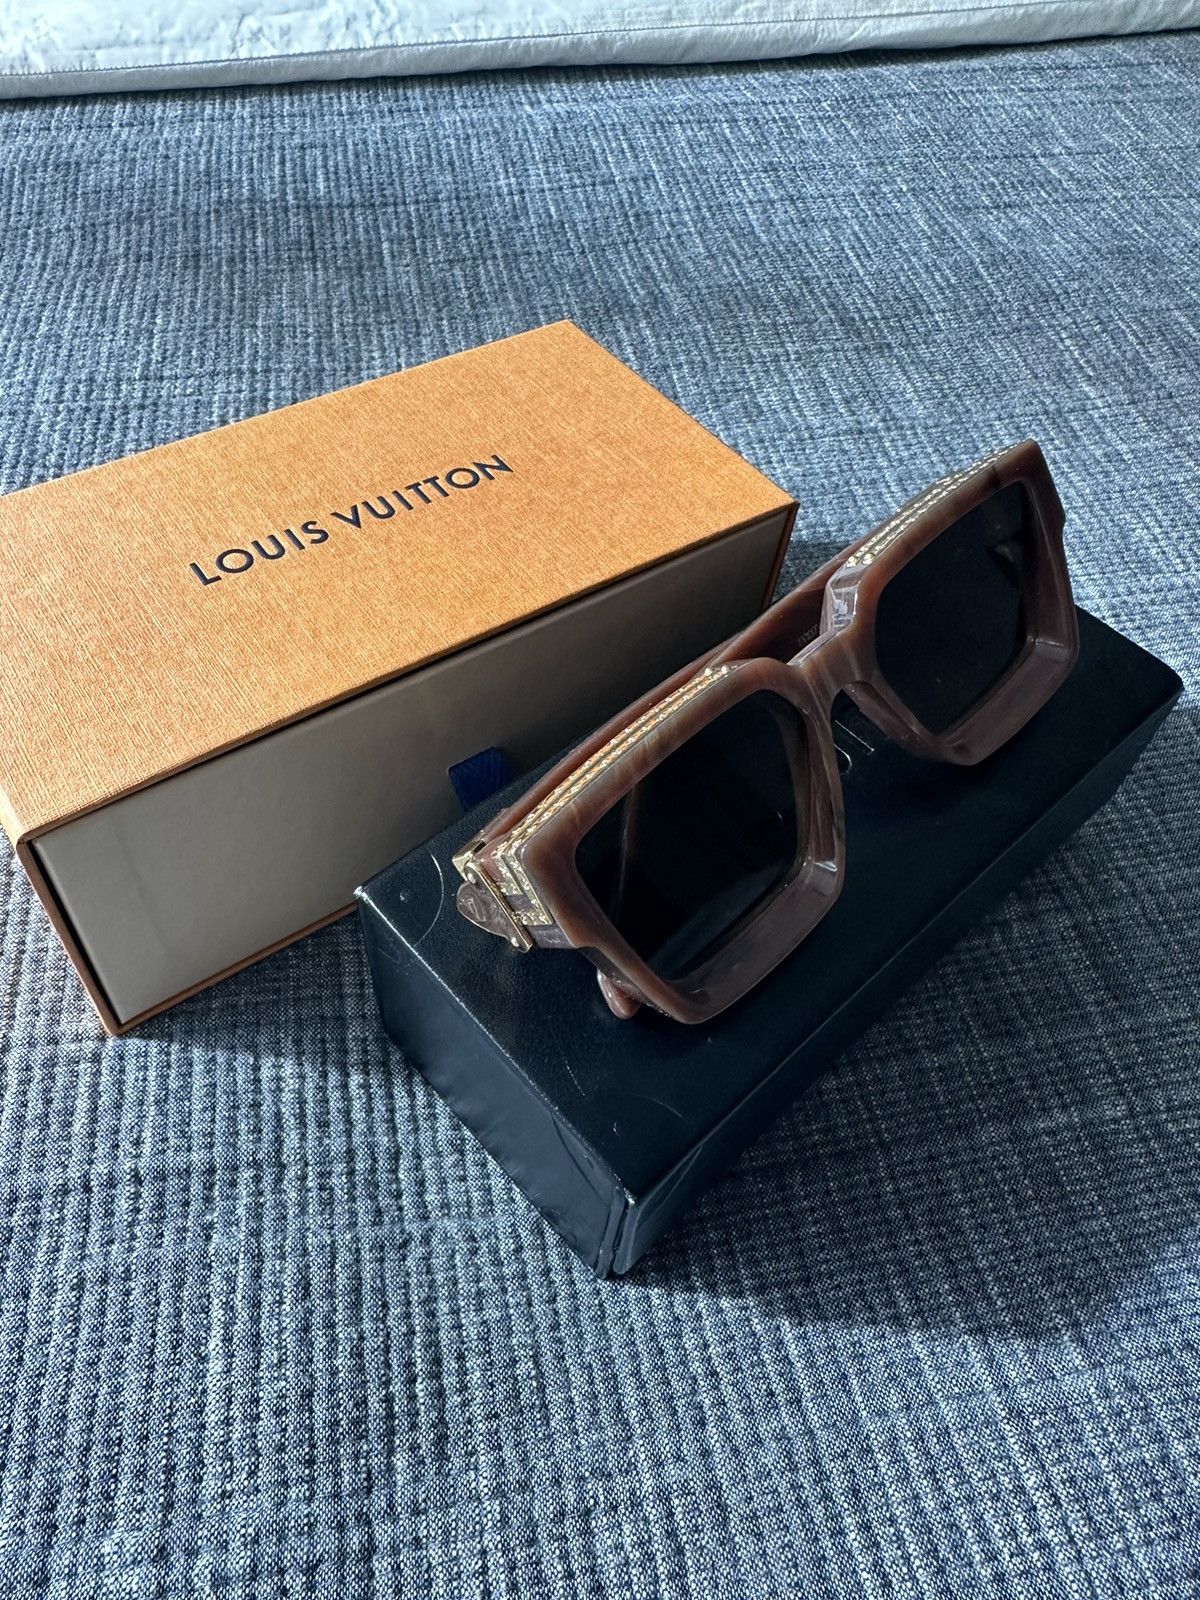 Sunglasses Louis Vuitton White in Plastic - 34846493